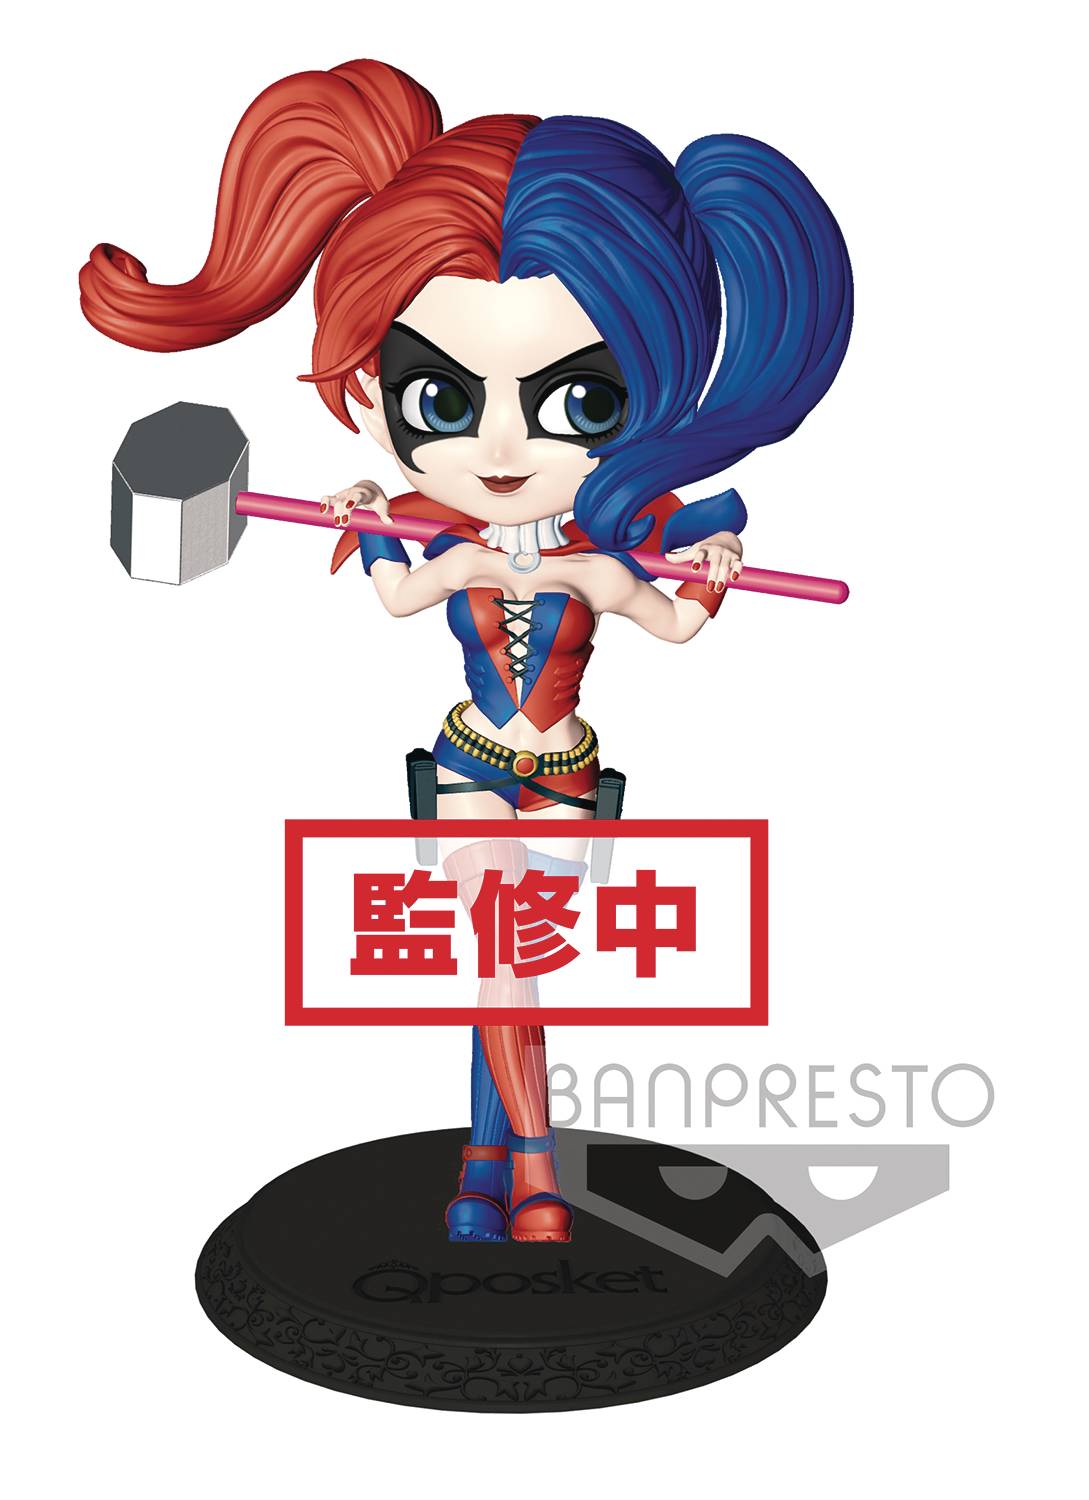 Banpresto DC Comics Harley Quinn Q-Posket Figure